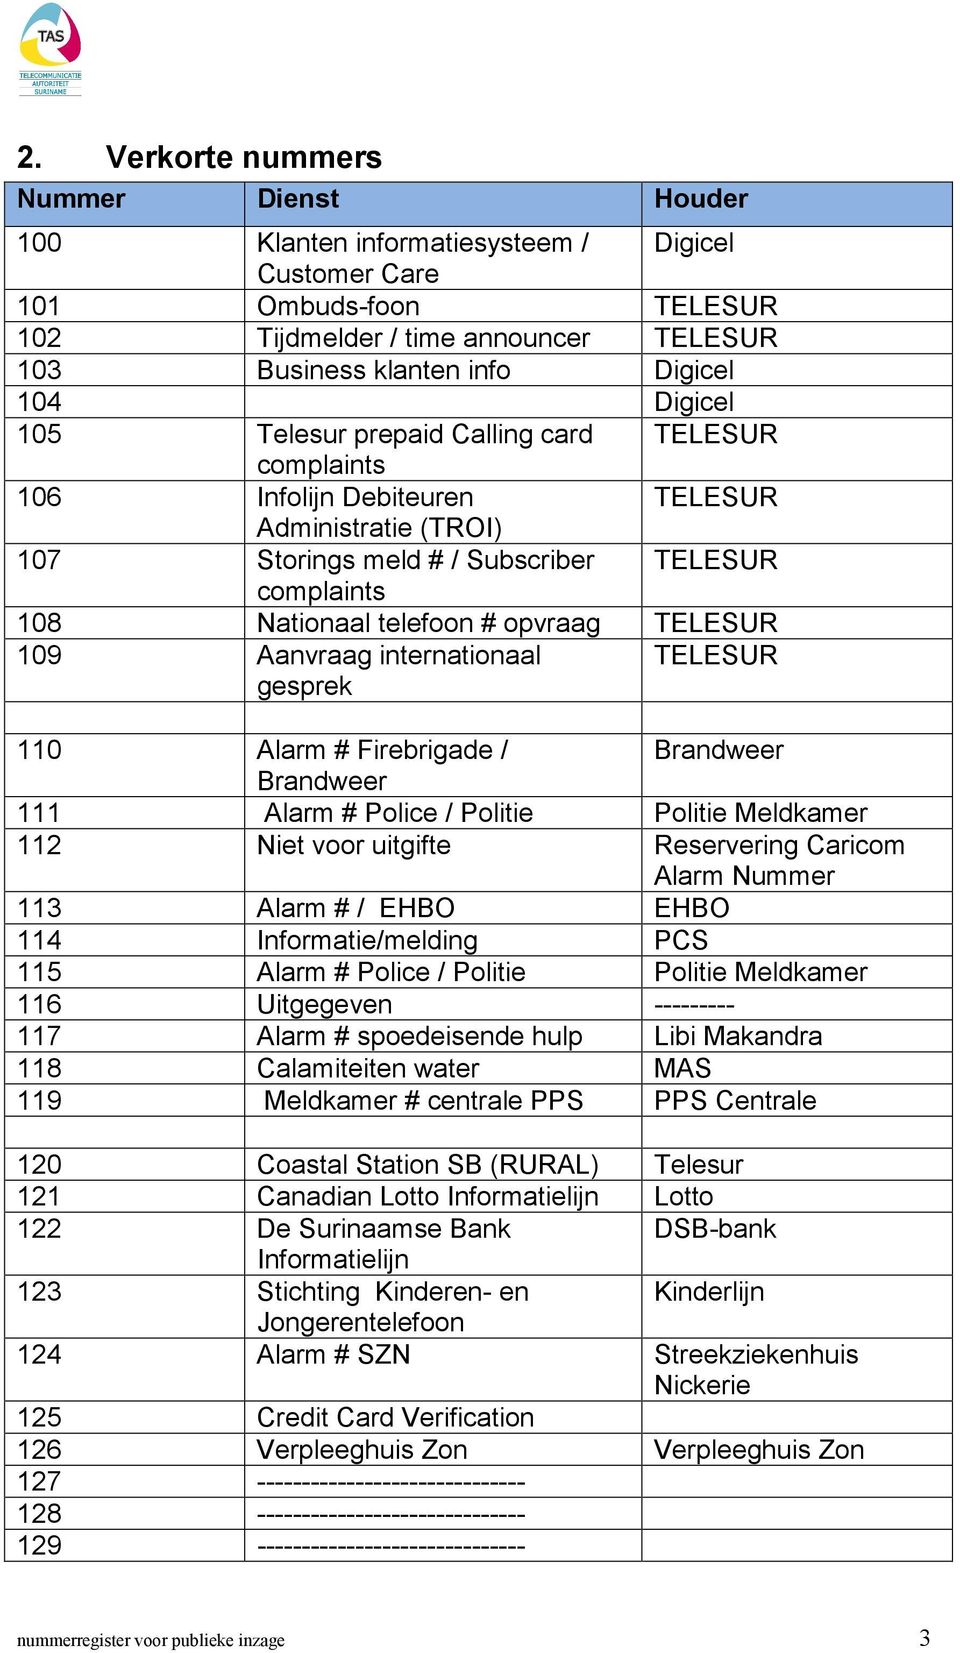 TELESUR 109 Aanvraag internationaal gesprek TELESUR 110 Alarm # Firebrigade / Brandweer Brandweer 111 Alarm # Police / Politie Politie Meldkamer 112 Niet voor uitgifte Reservering Caricom Alarm